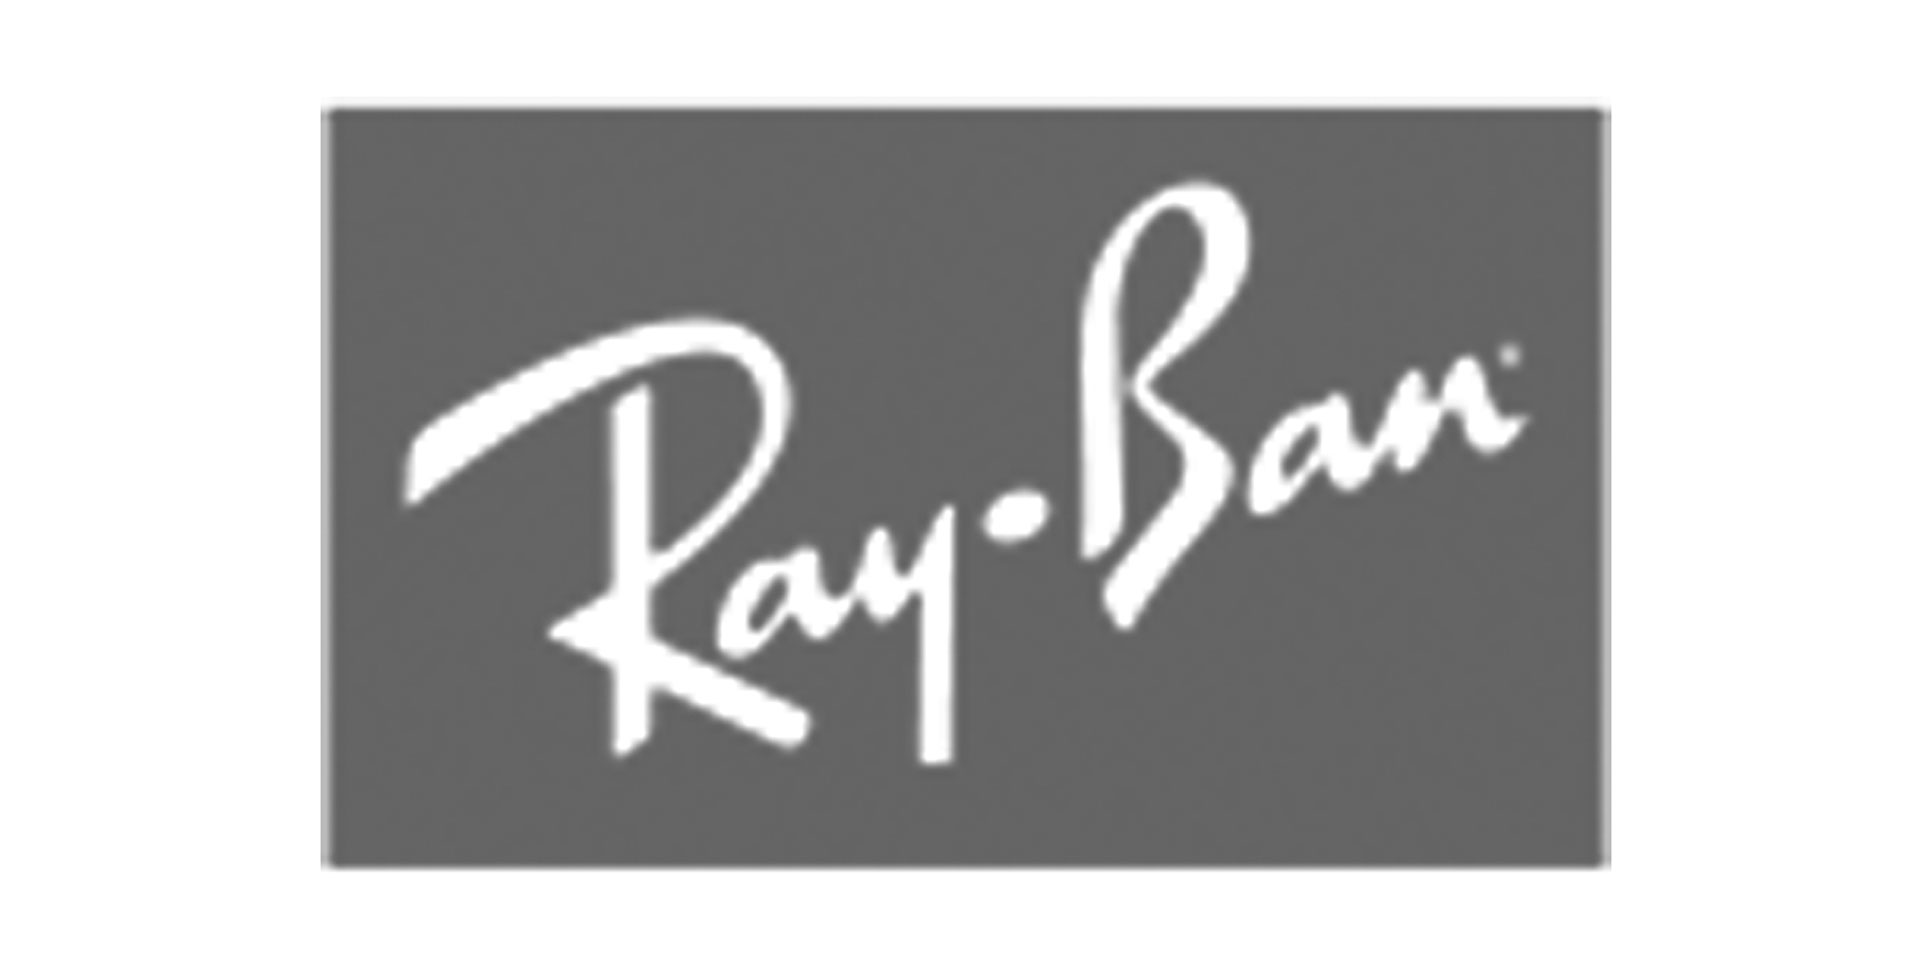 Shop Ray-Ban Aviator Classic Sunglasses Online